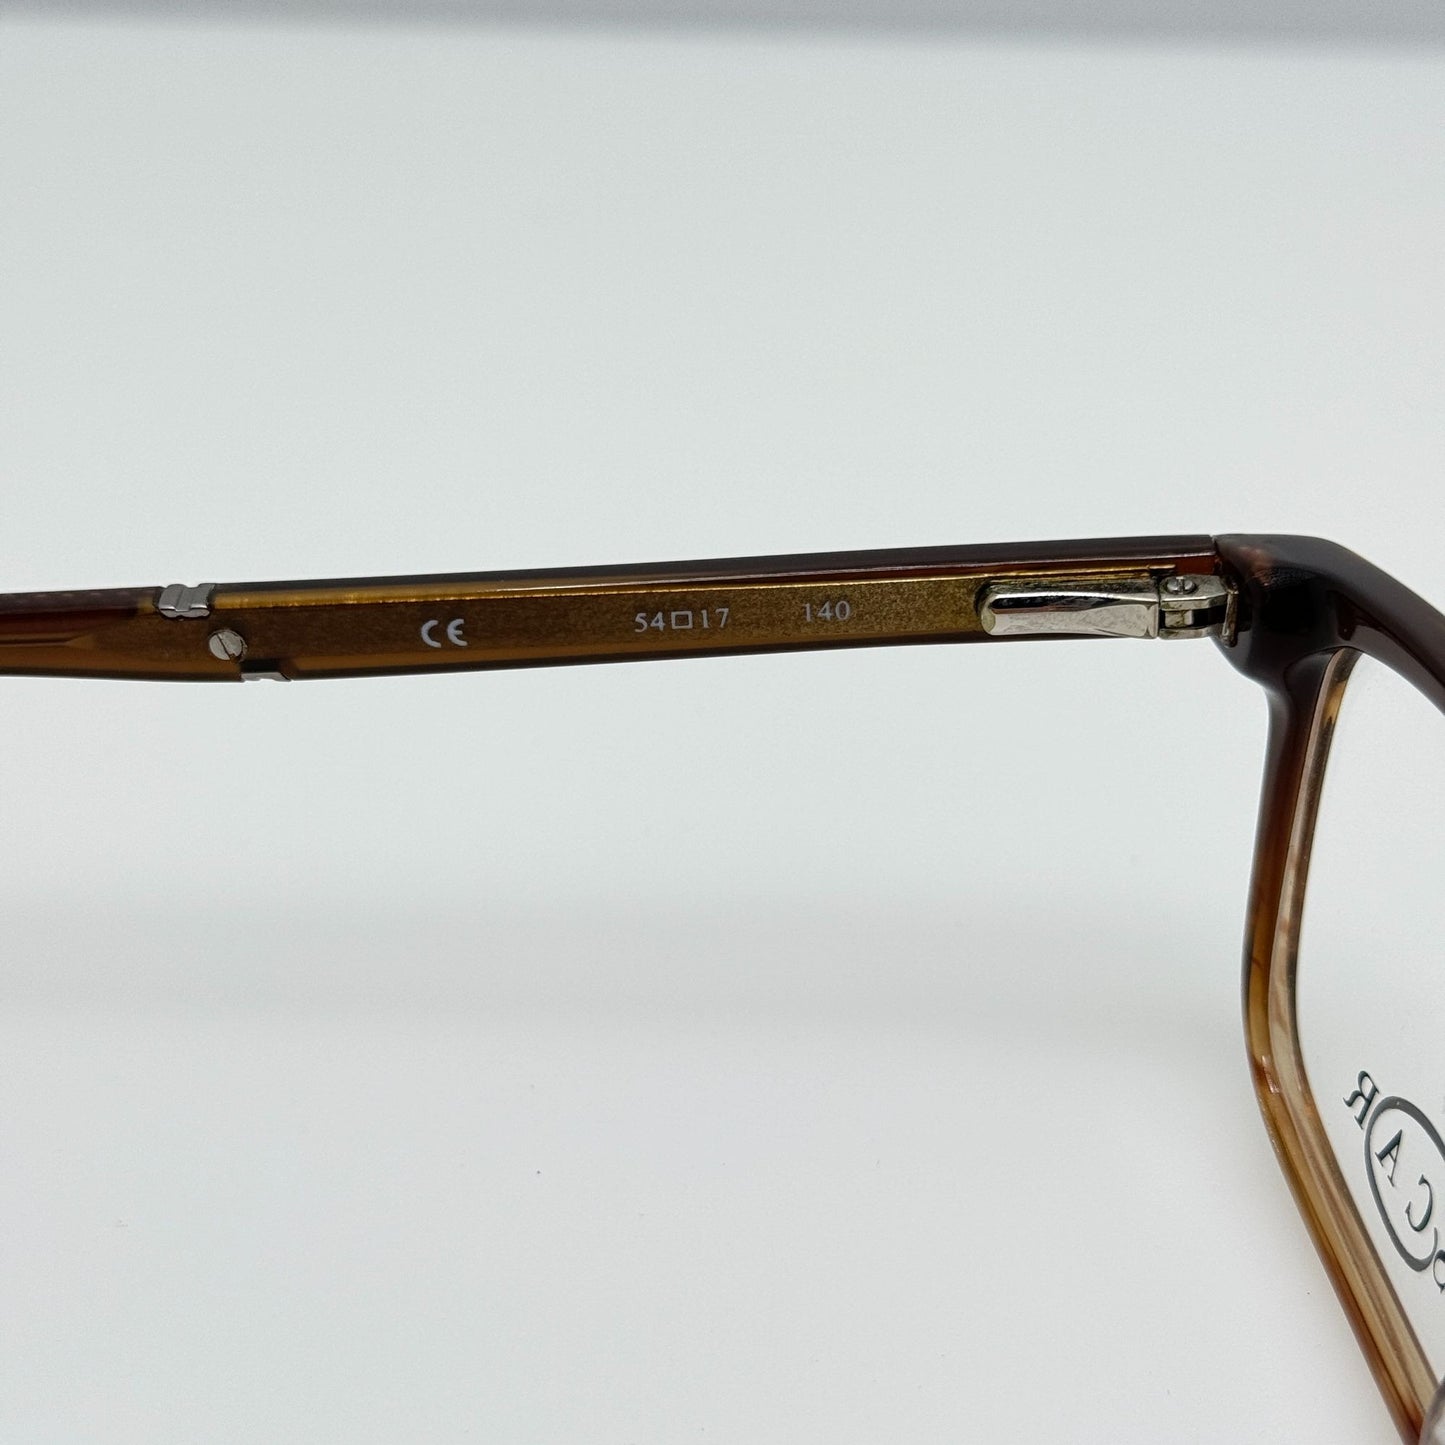 Oscar De La Renta Eyeglasses Eye Glasses Frames OSM829 210 54-17-140